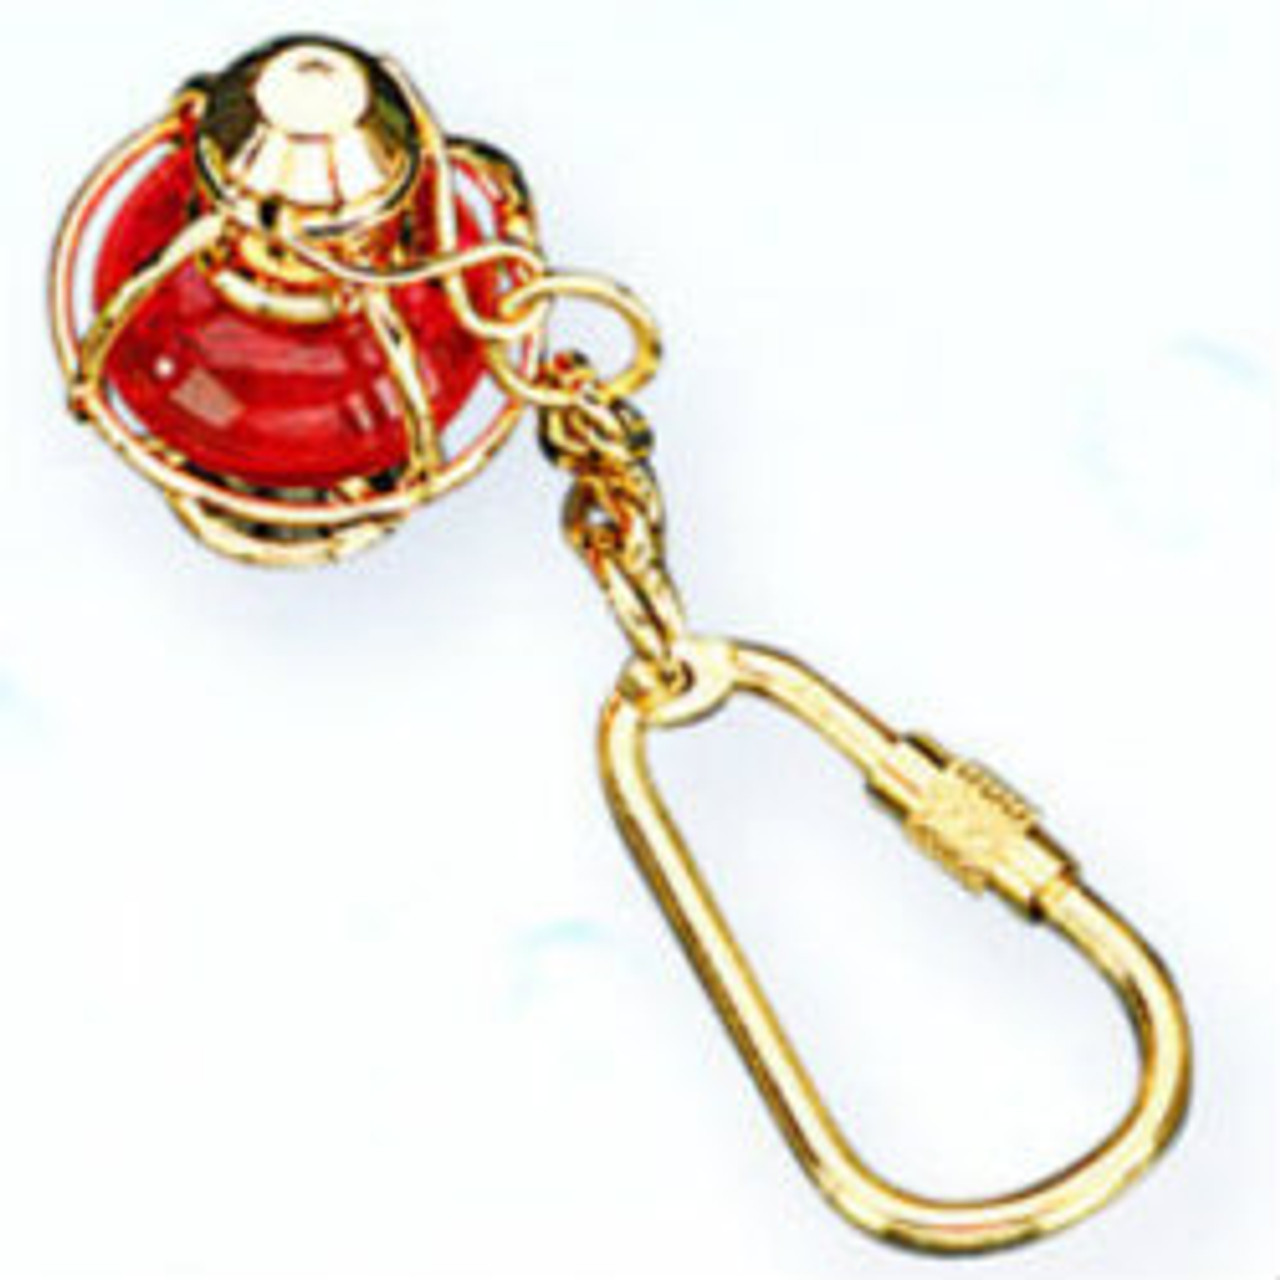 Brass Key Chain - Red Lantern